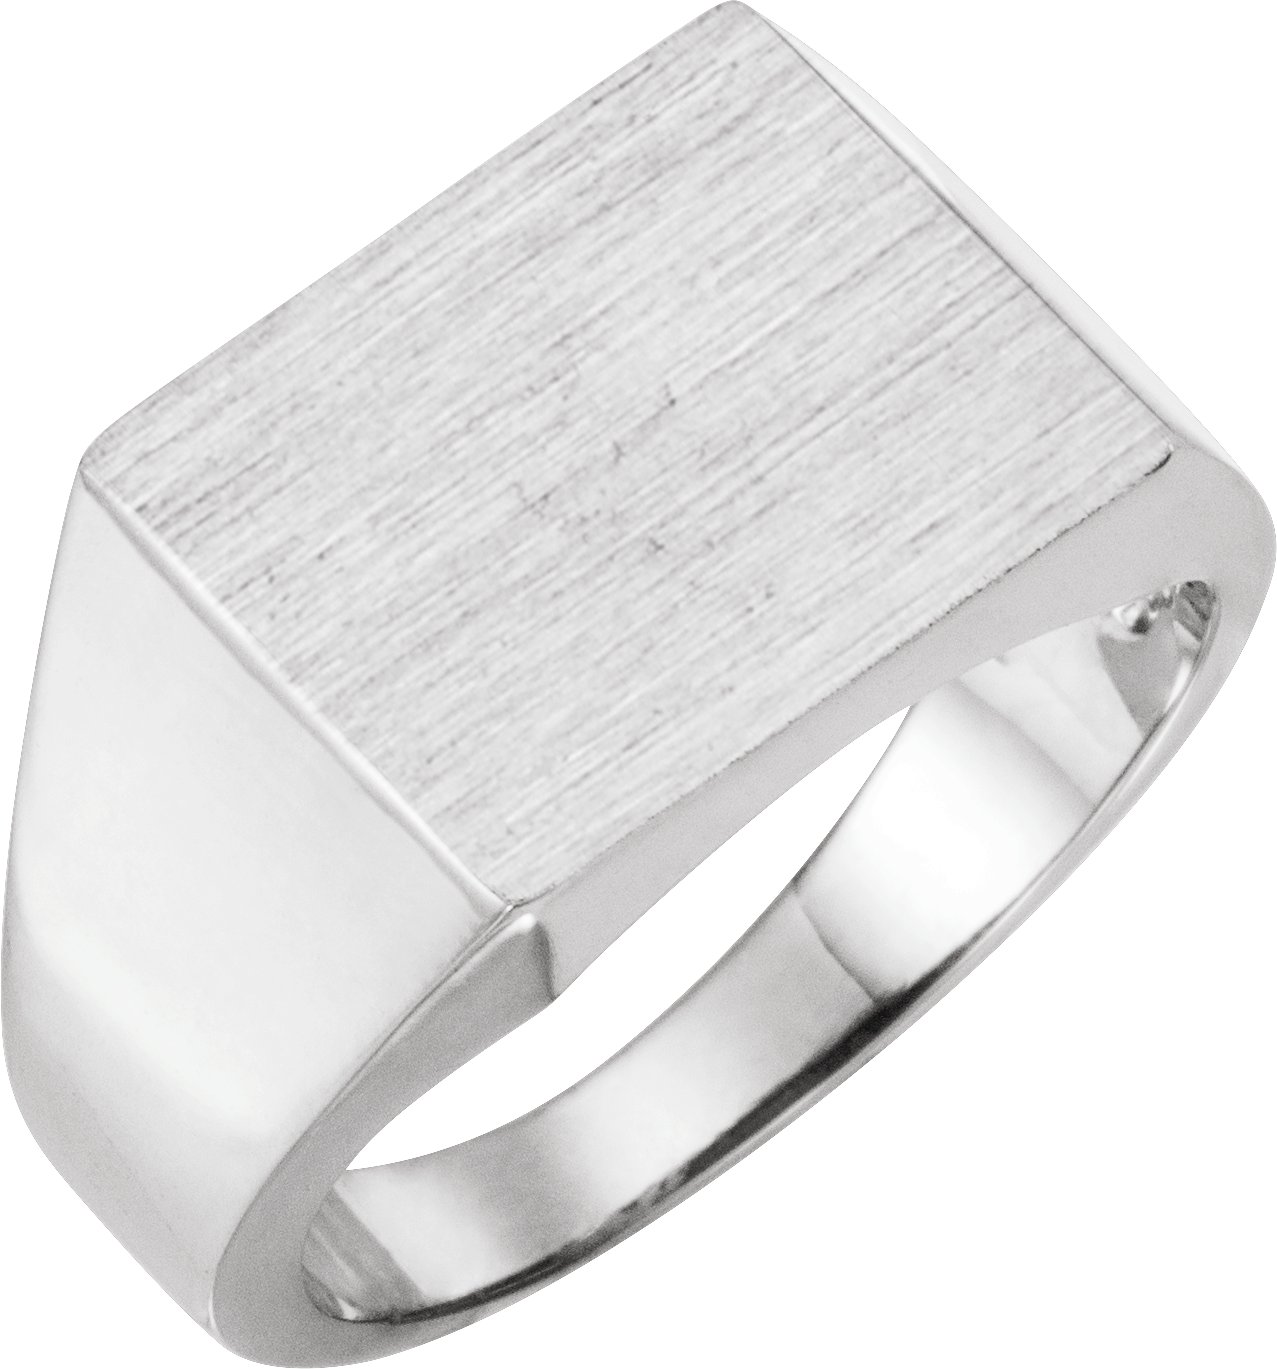 ovy Silver Signet Ring 11号(51.3mm) - アクセサリー